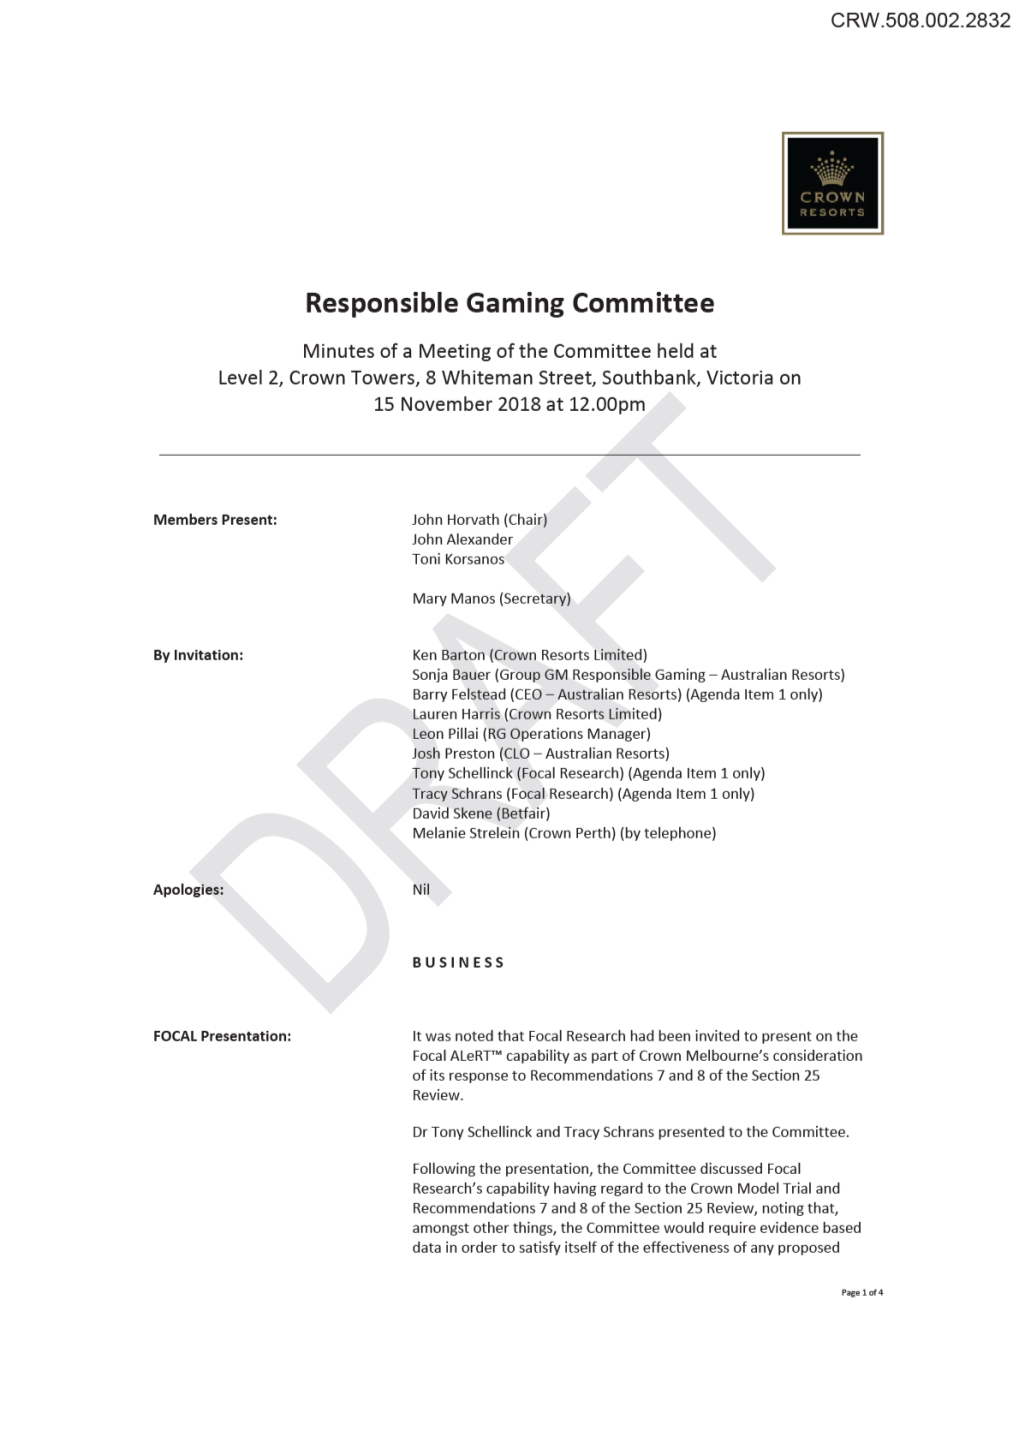 Responsible Gaming Committee